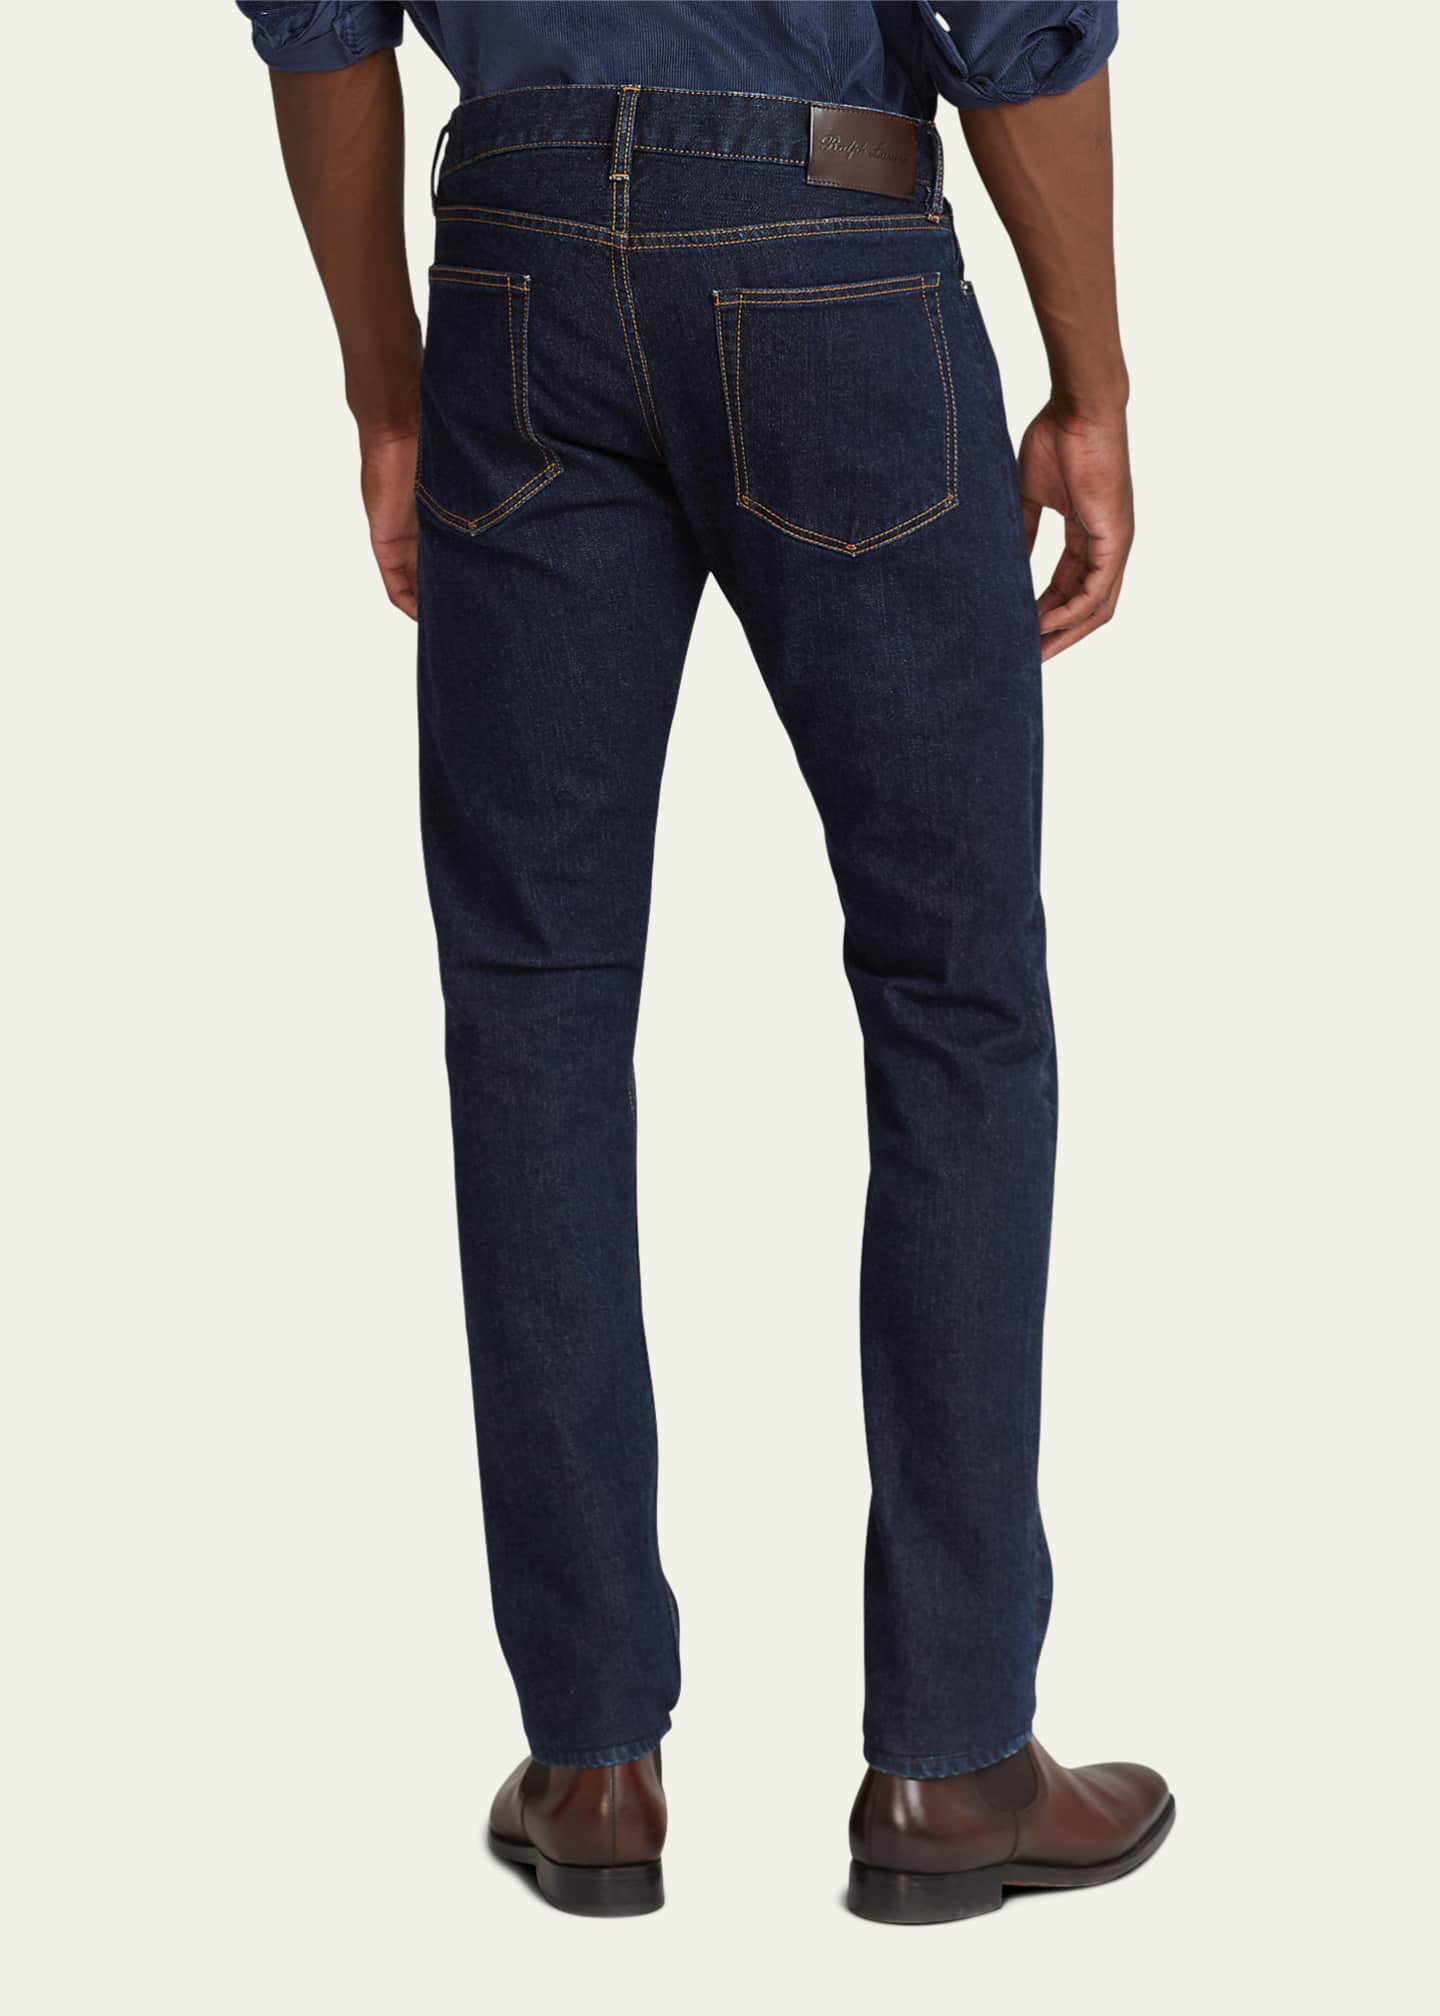 Men's Slim Fit Stretch Jeans